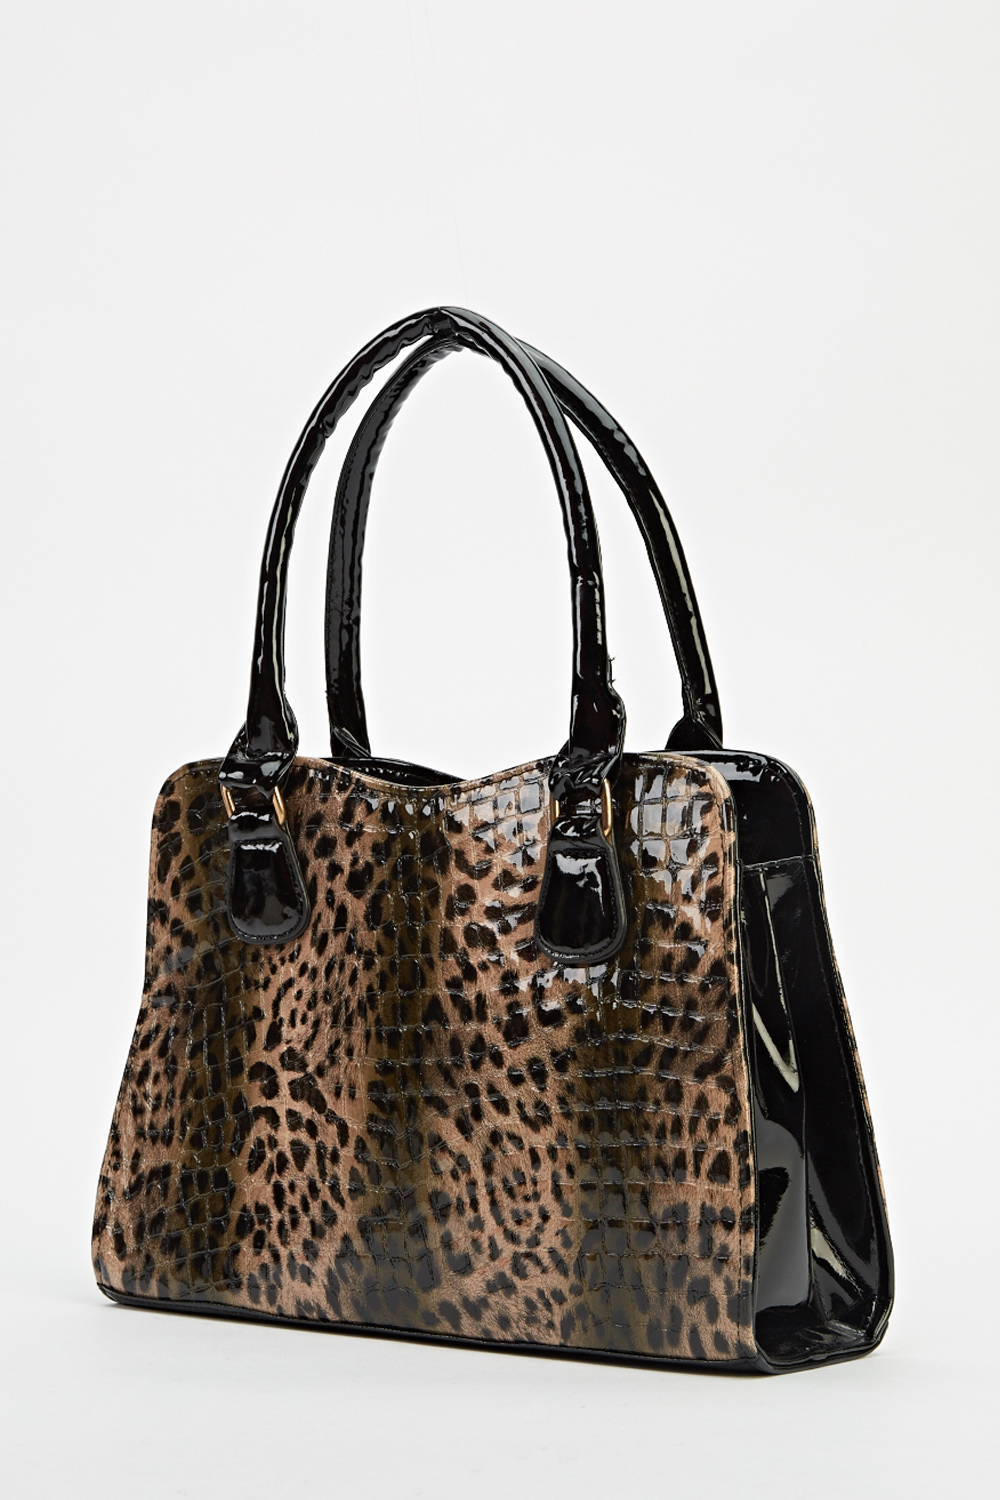 Black leopard print bag